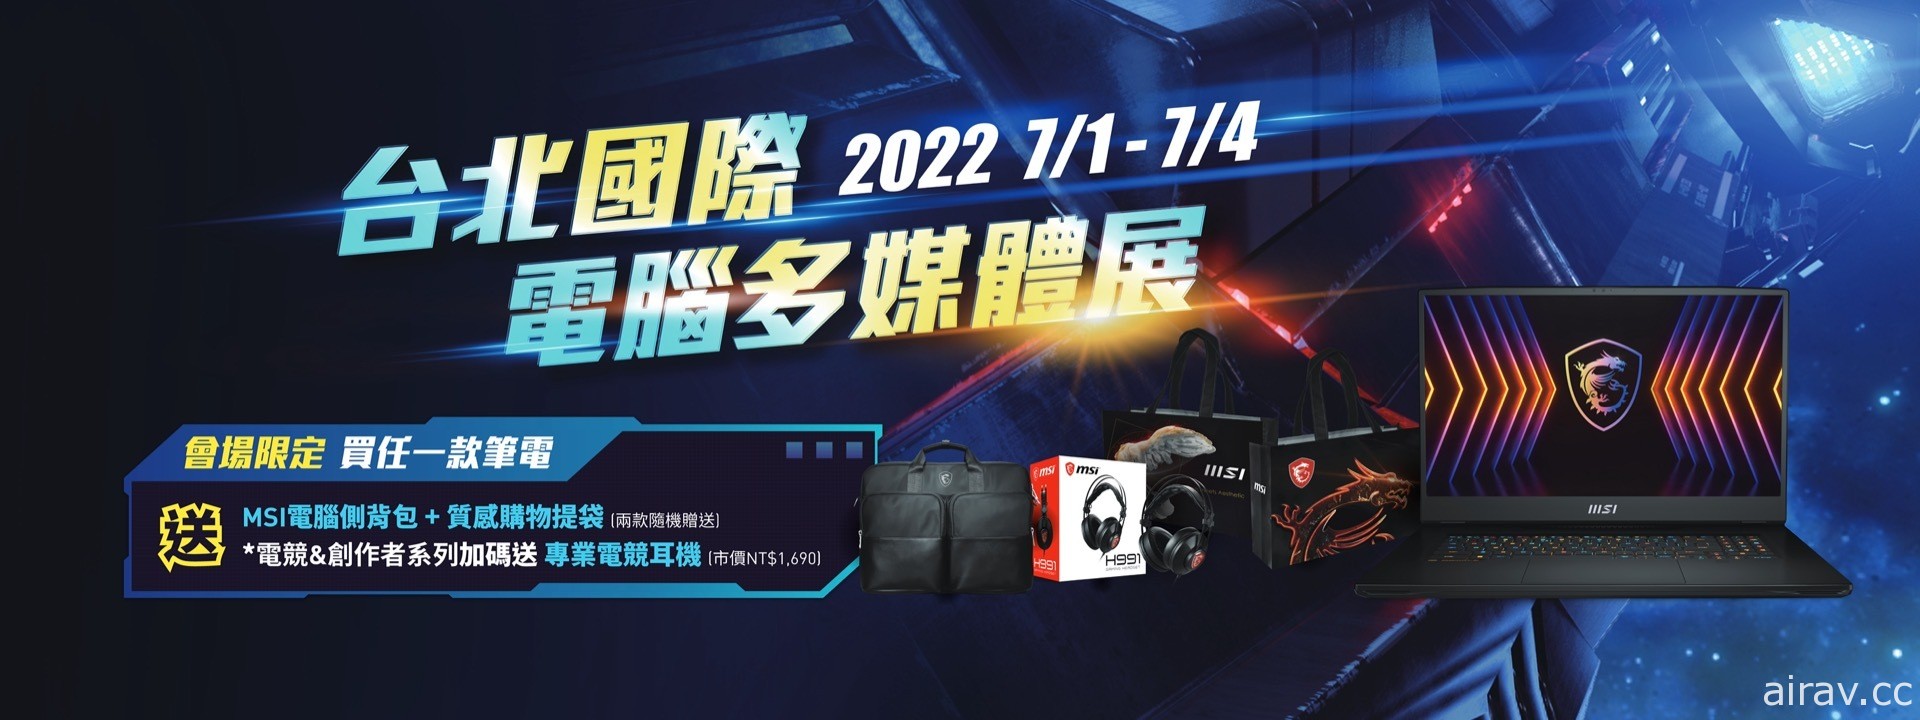 MSI 發表全新旗艦筆電 Titan GT77 將於台北電腦多媒體展開放搶先體驗